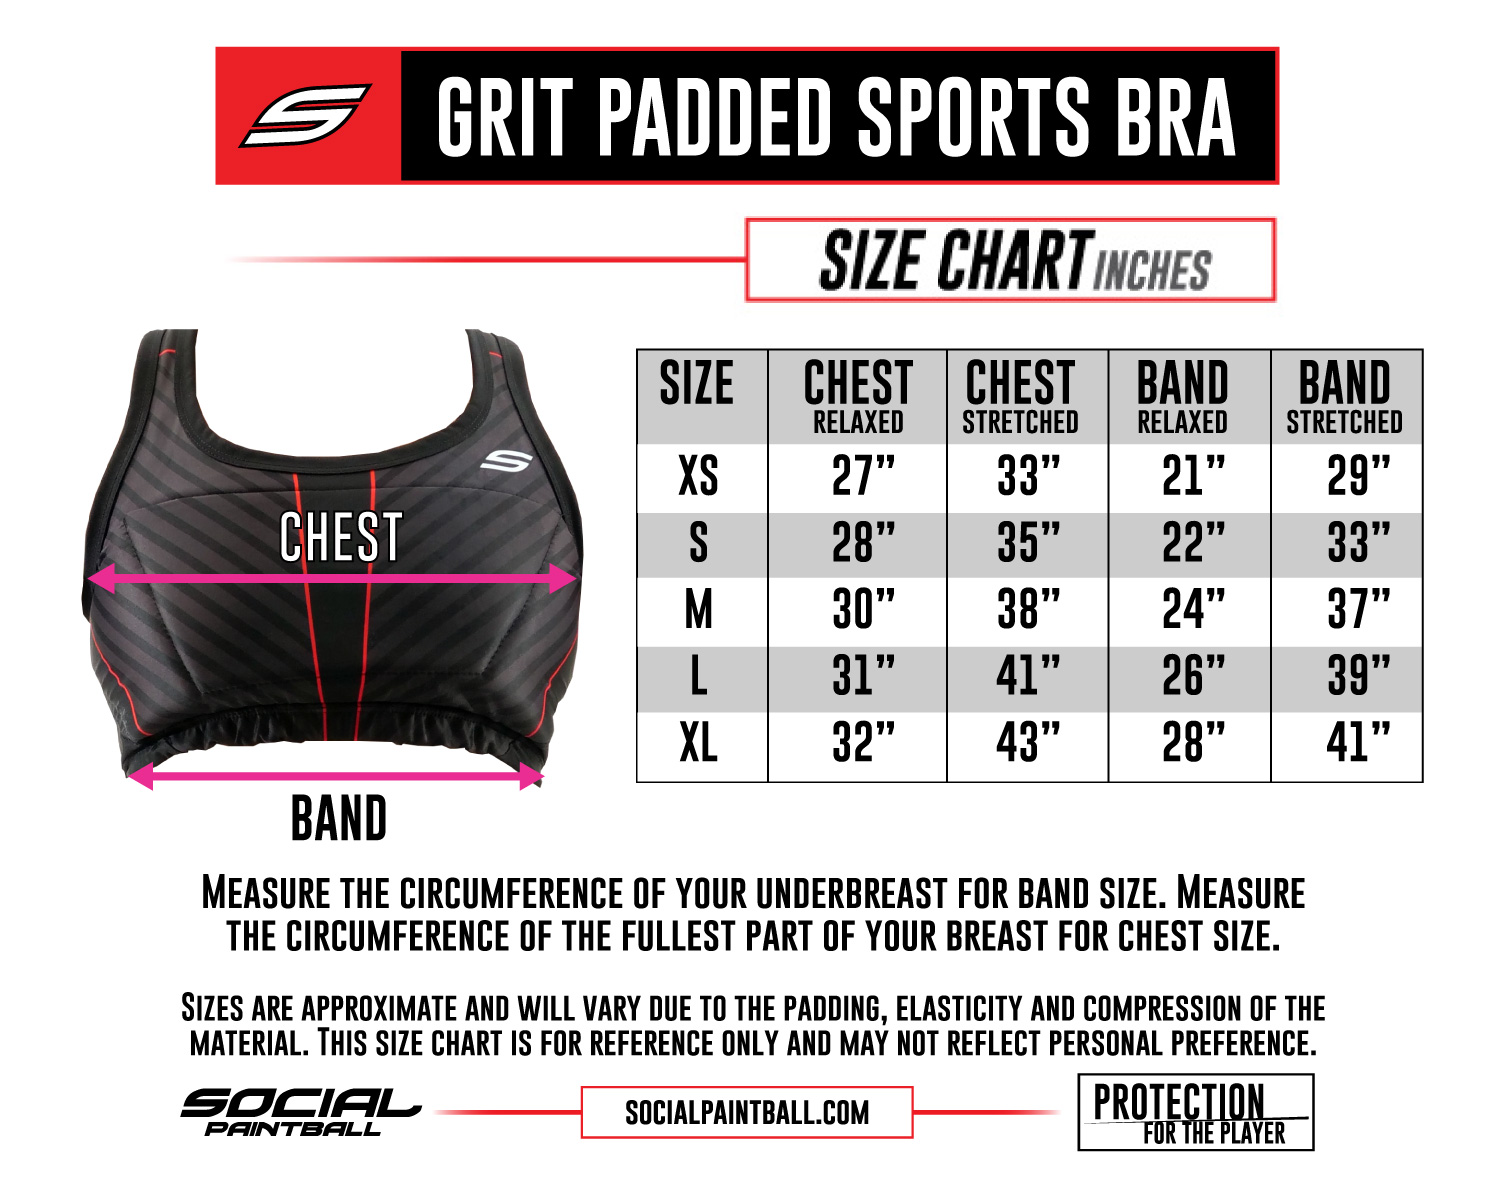 Grit Padded Sports Bra Size Chart